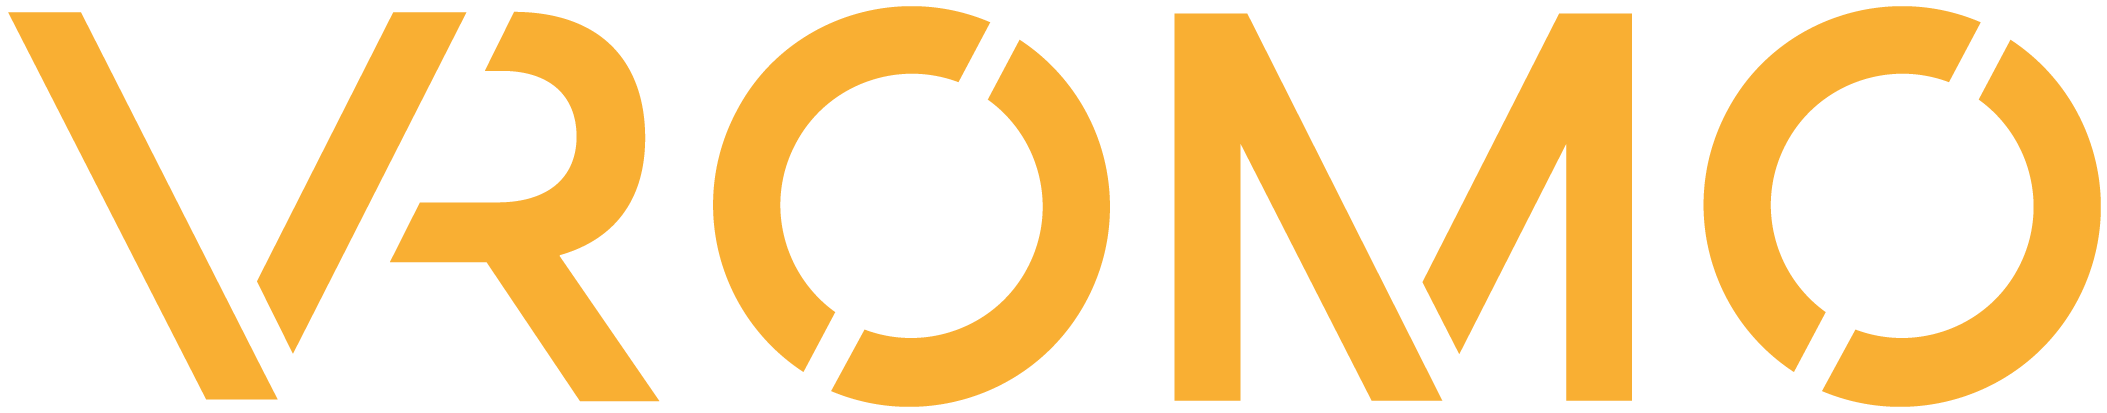 VROMO-logo-yellow.png